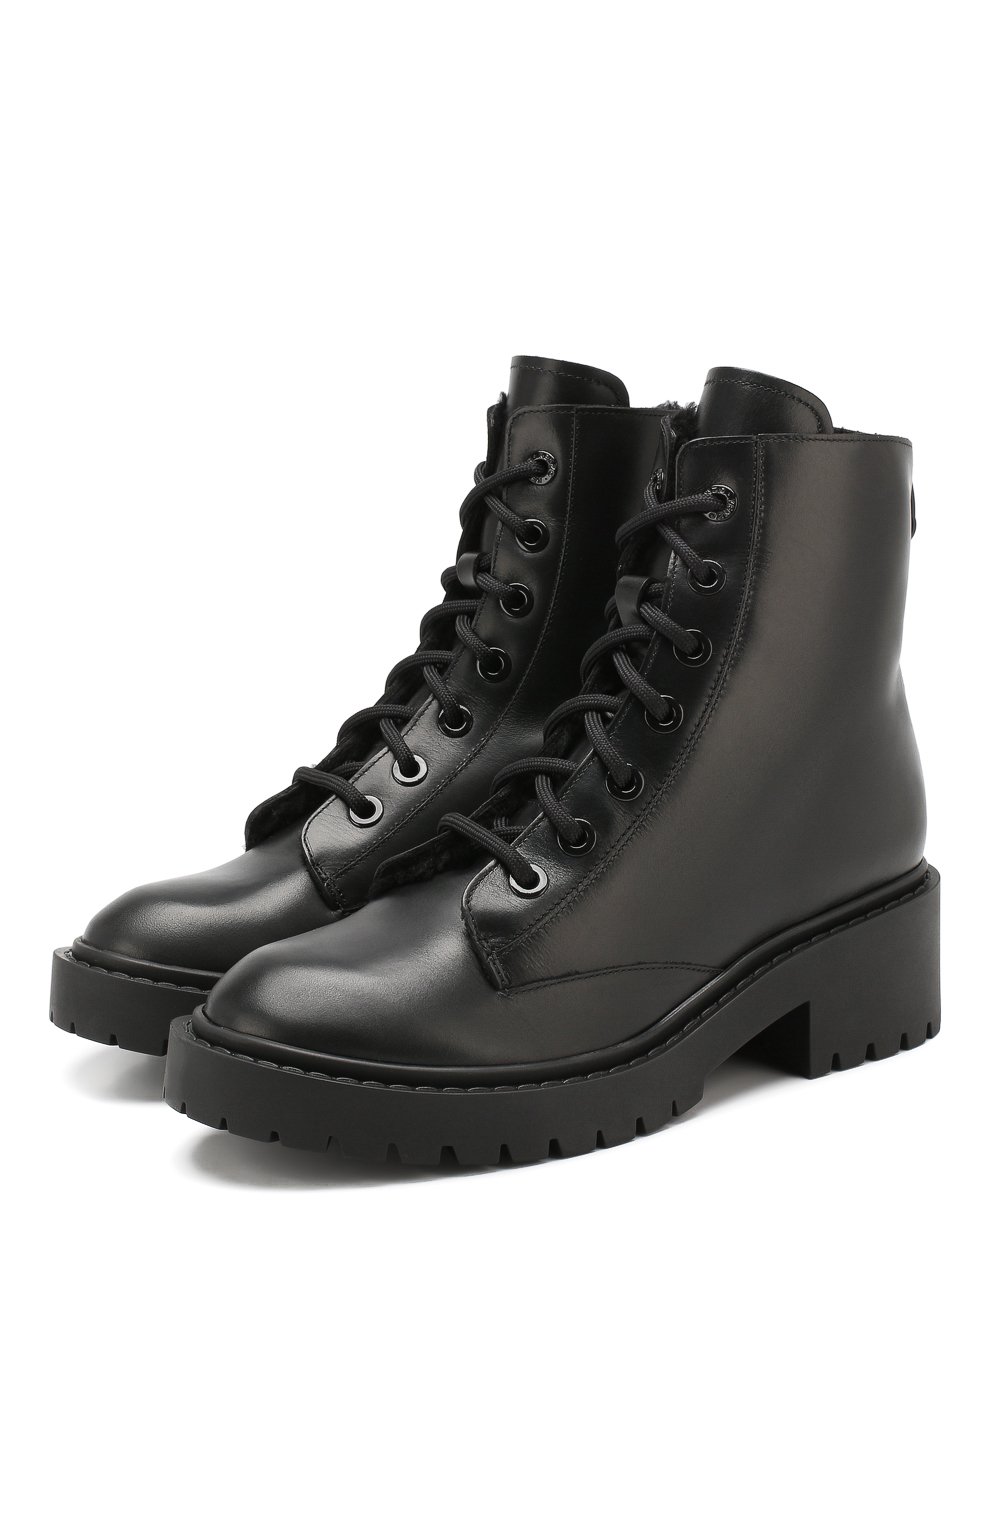 Цум ботинки. Ботинки Кензо женские. Kenzo ботинки в стиле милитари. Kenzo Leather Boots. Лаковые черные ботинки Kenzo.